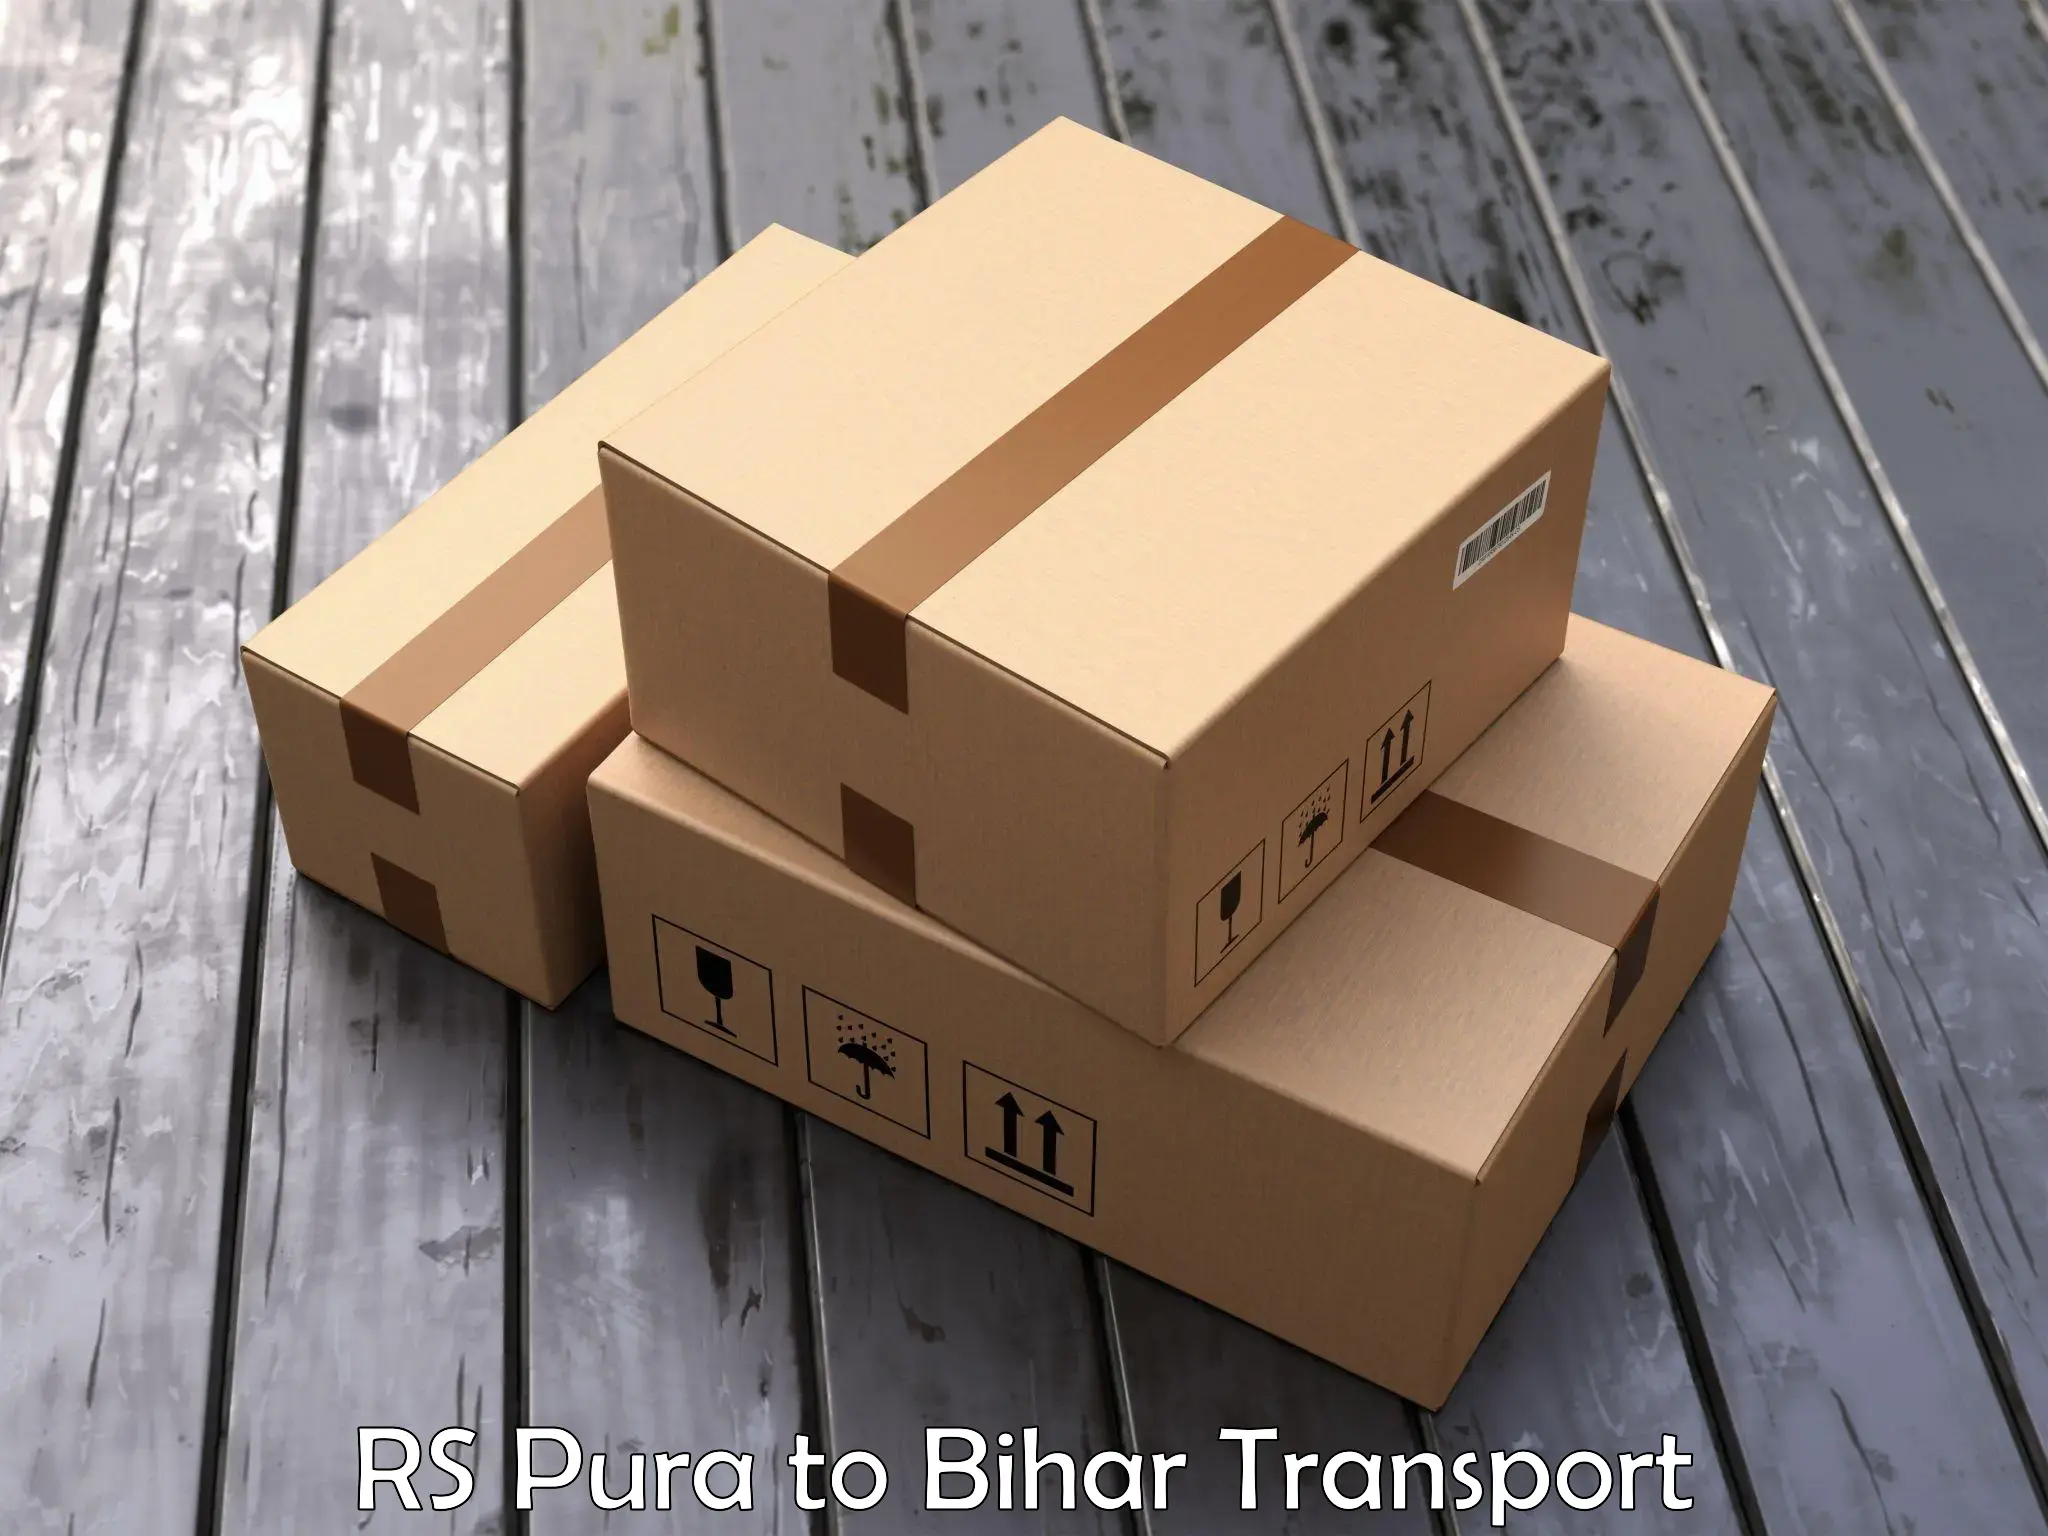 Cycle transportation service RS Pura to Bihar